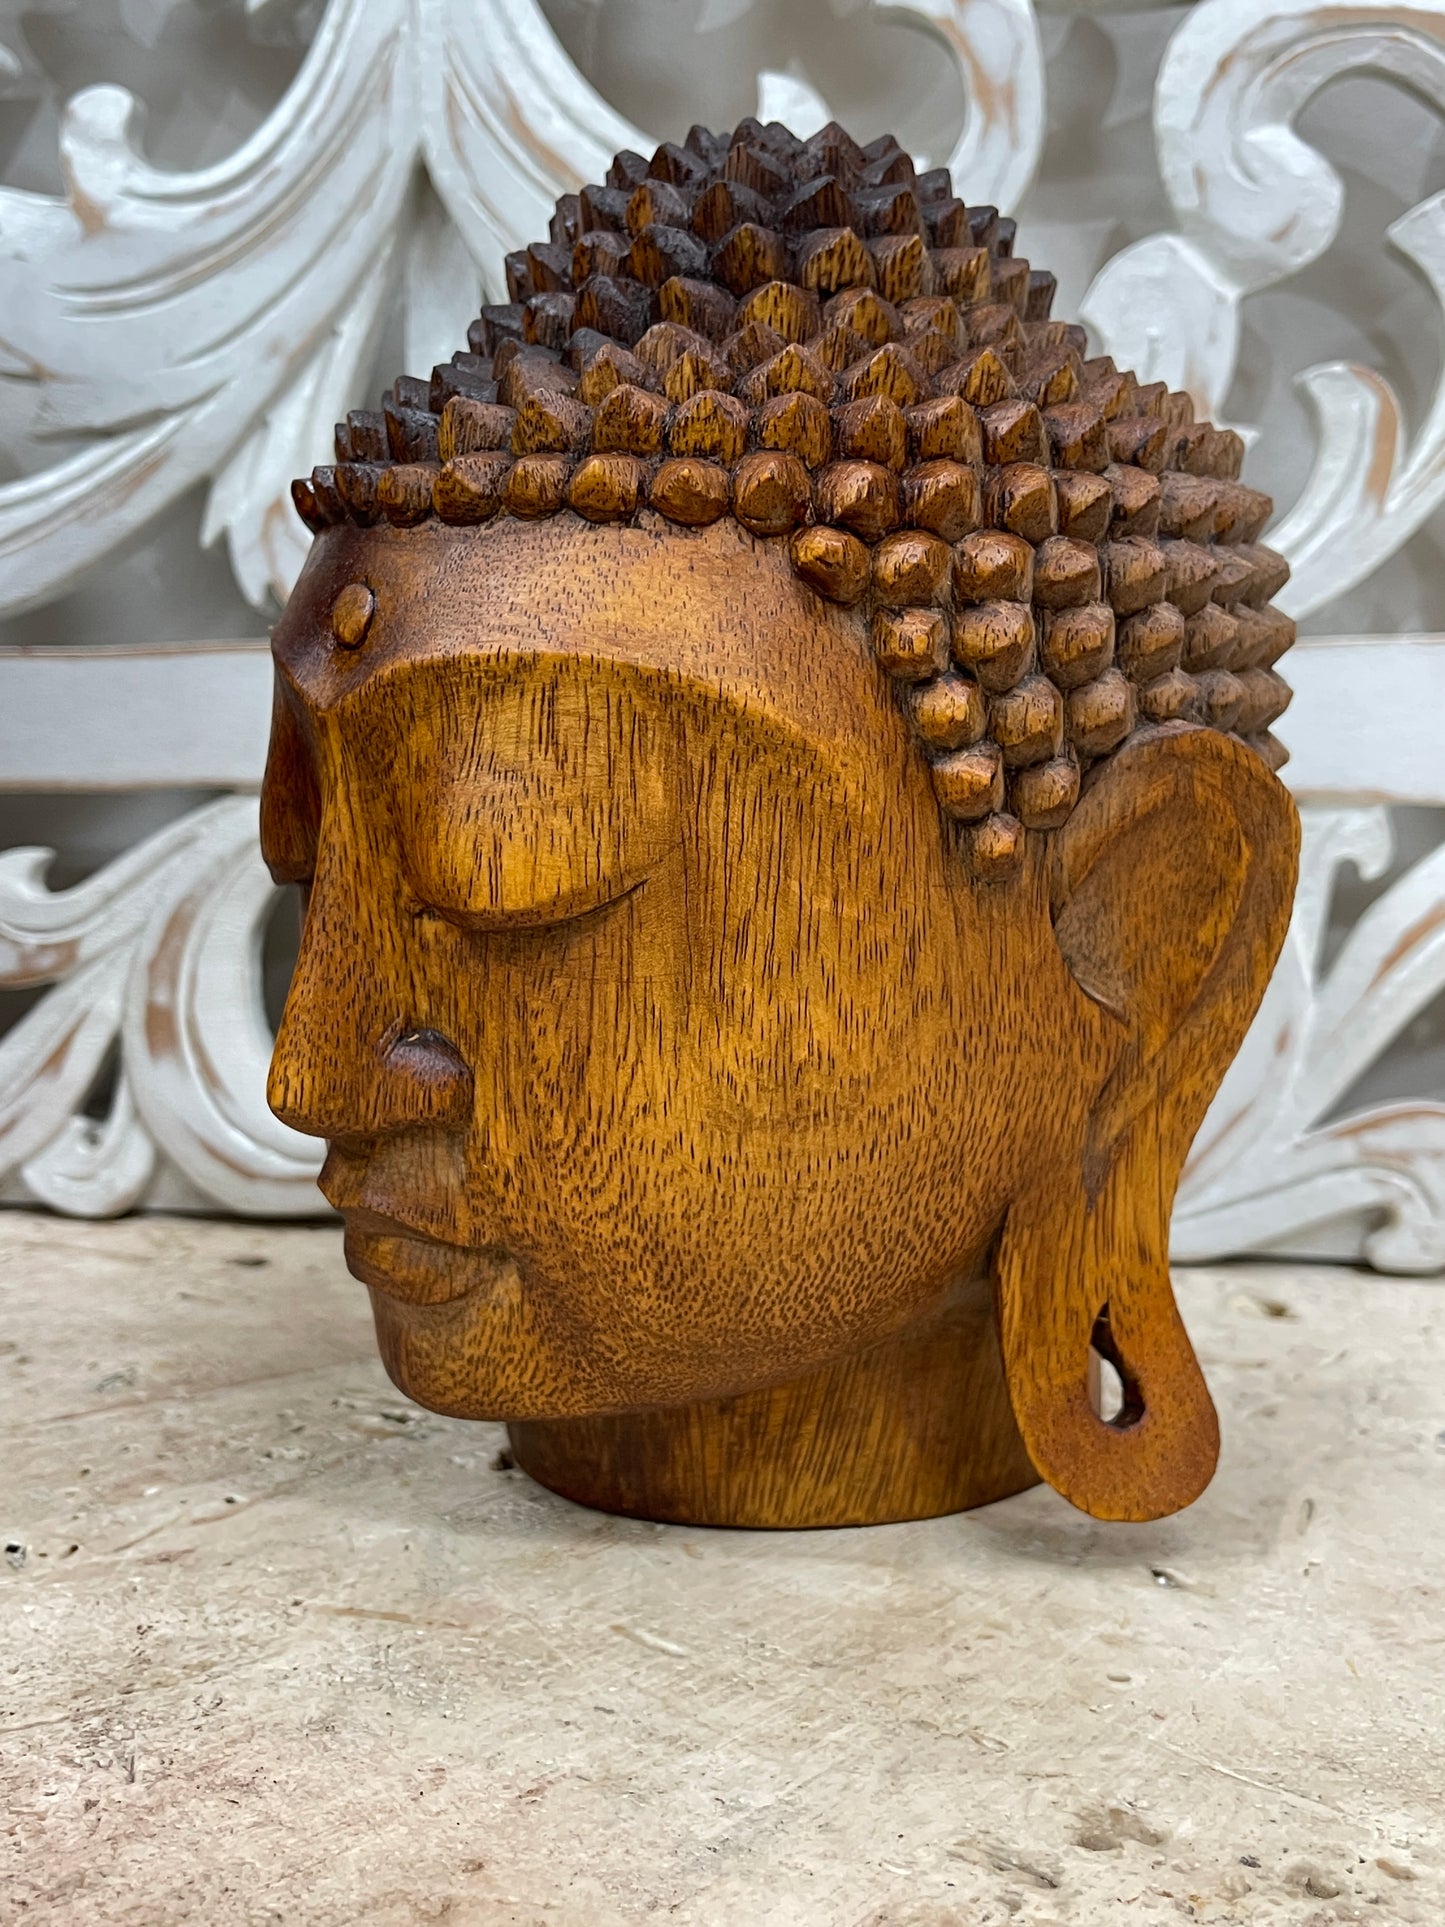 Suar wood Buddha Busts